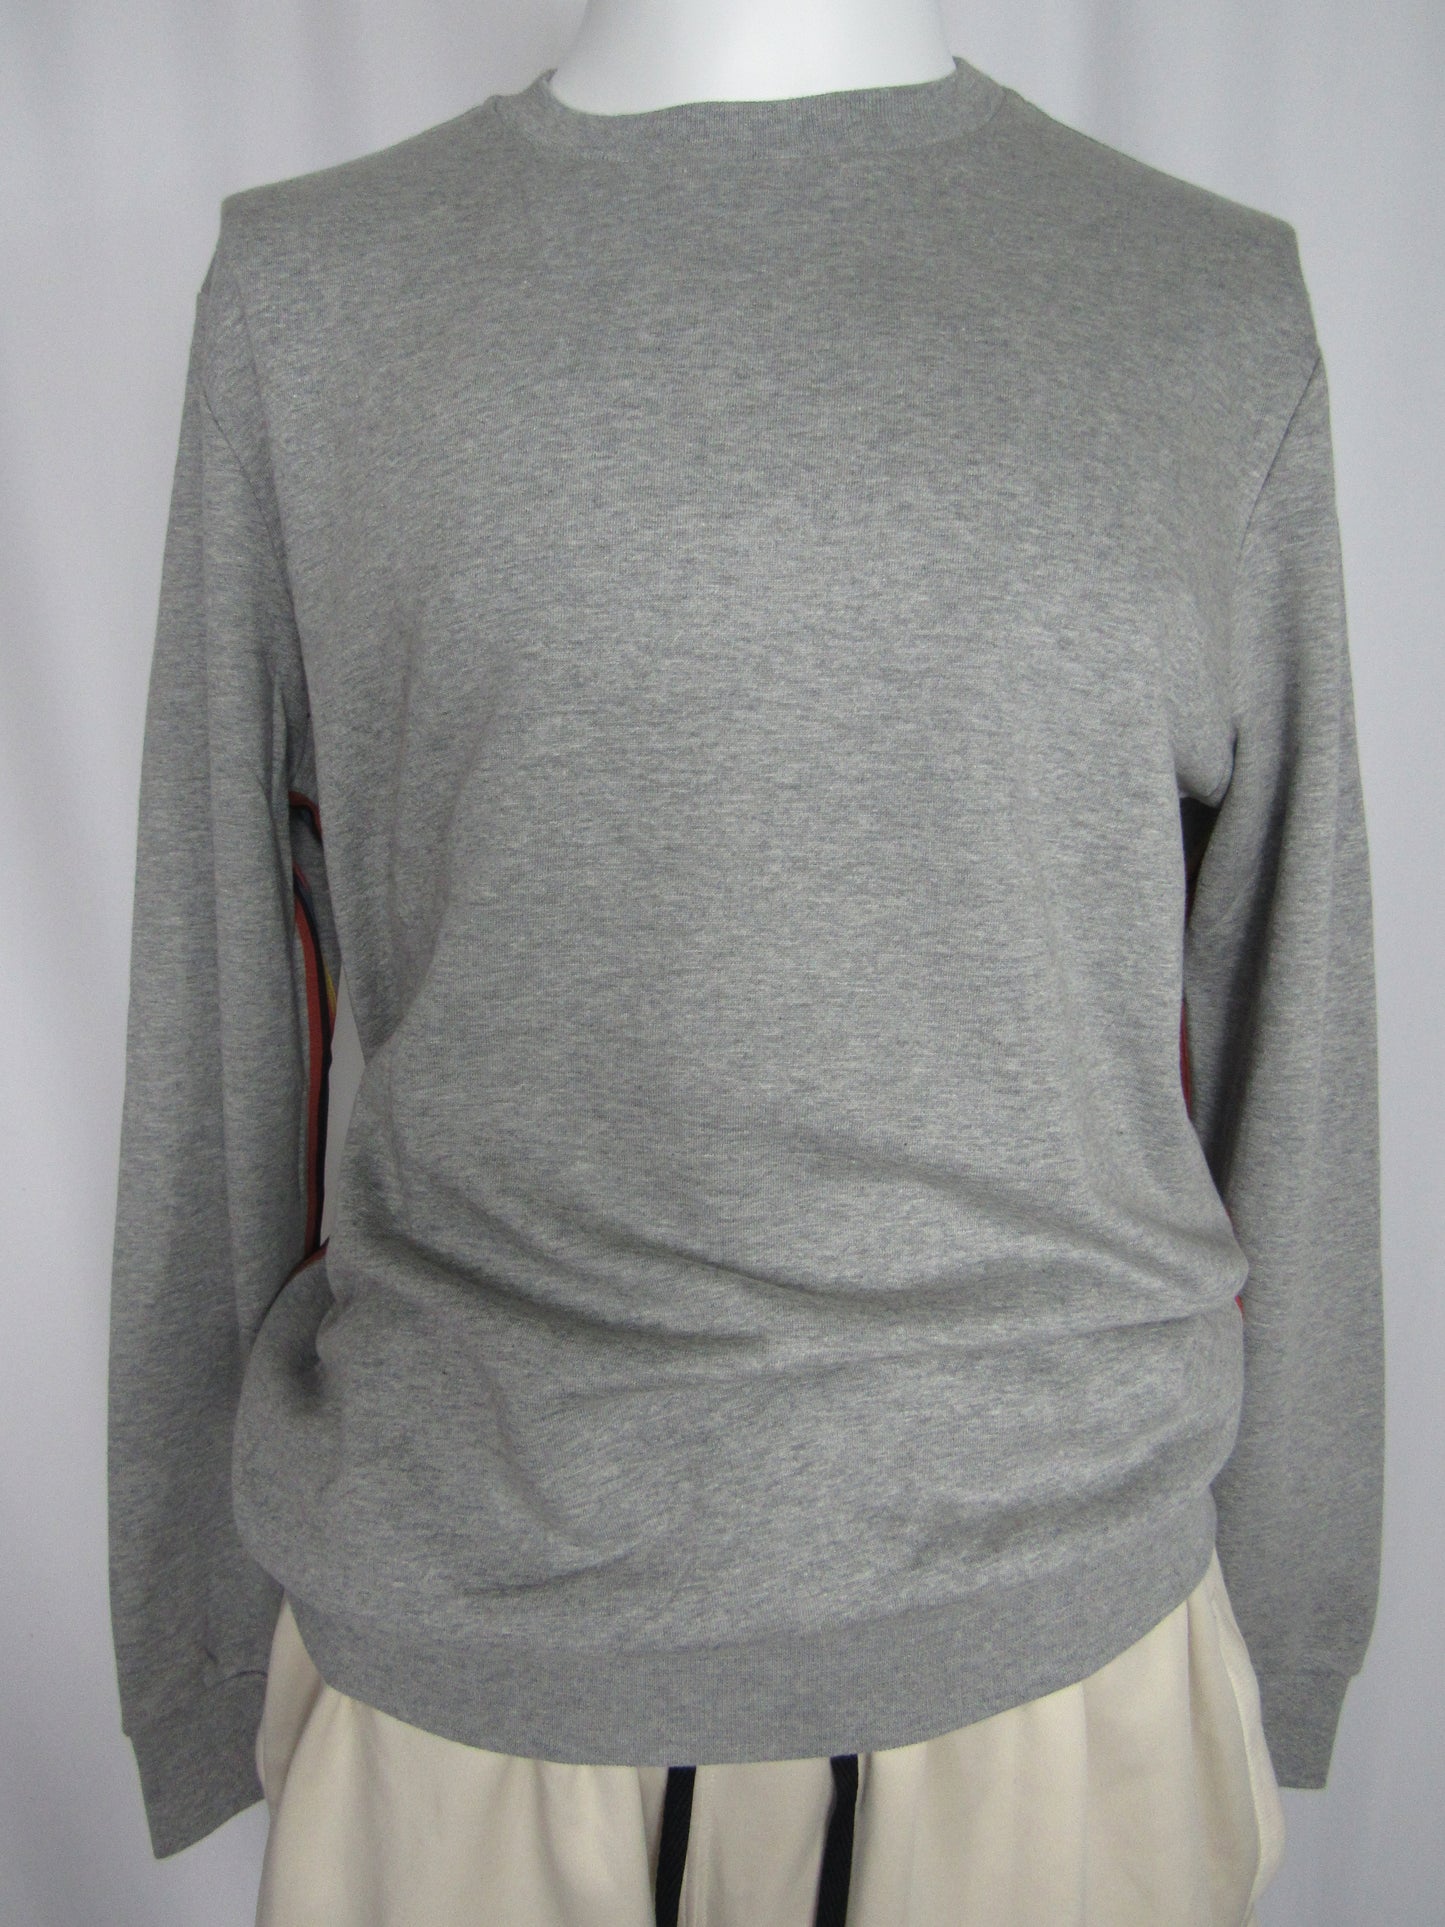 PAUL SMITH Sweatshirt - Size XL